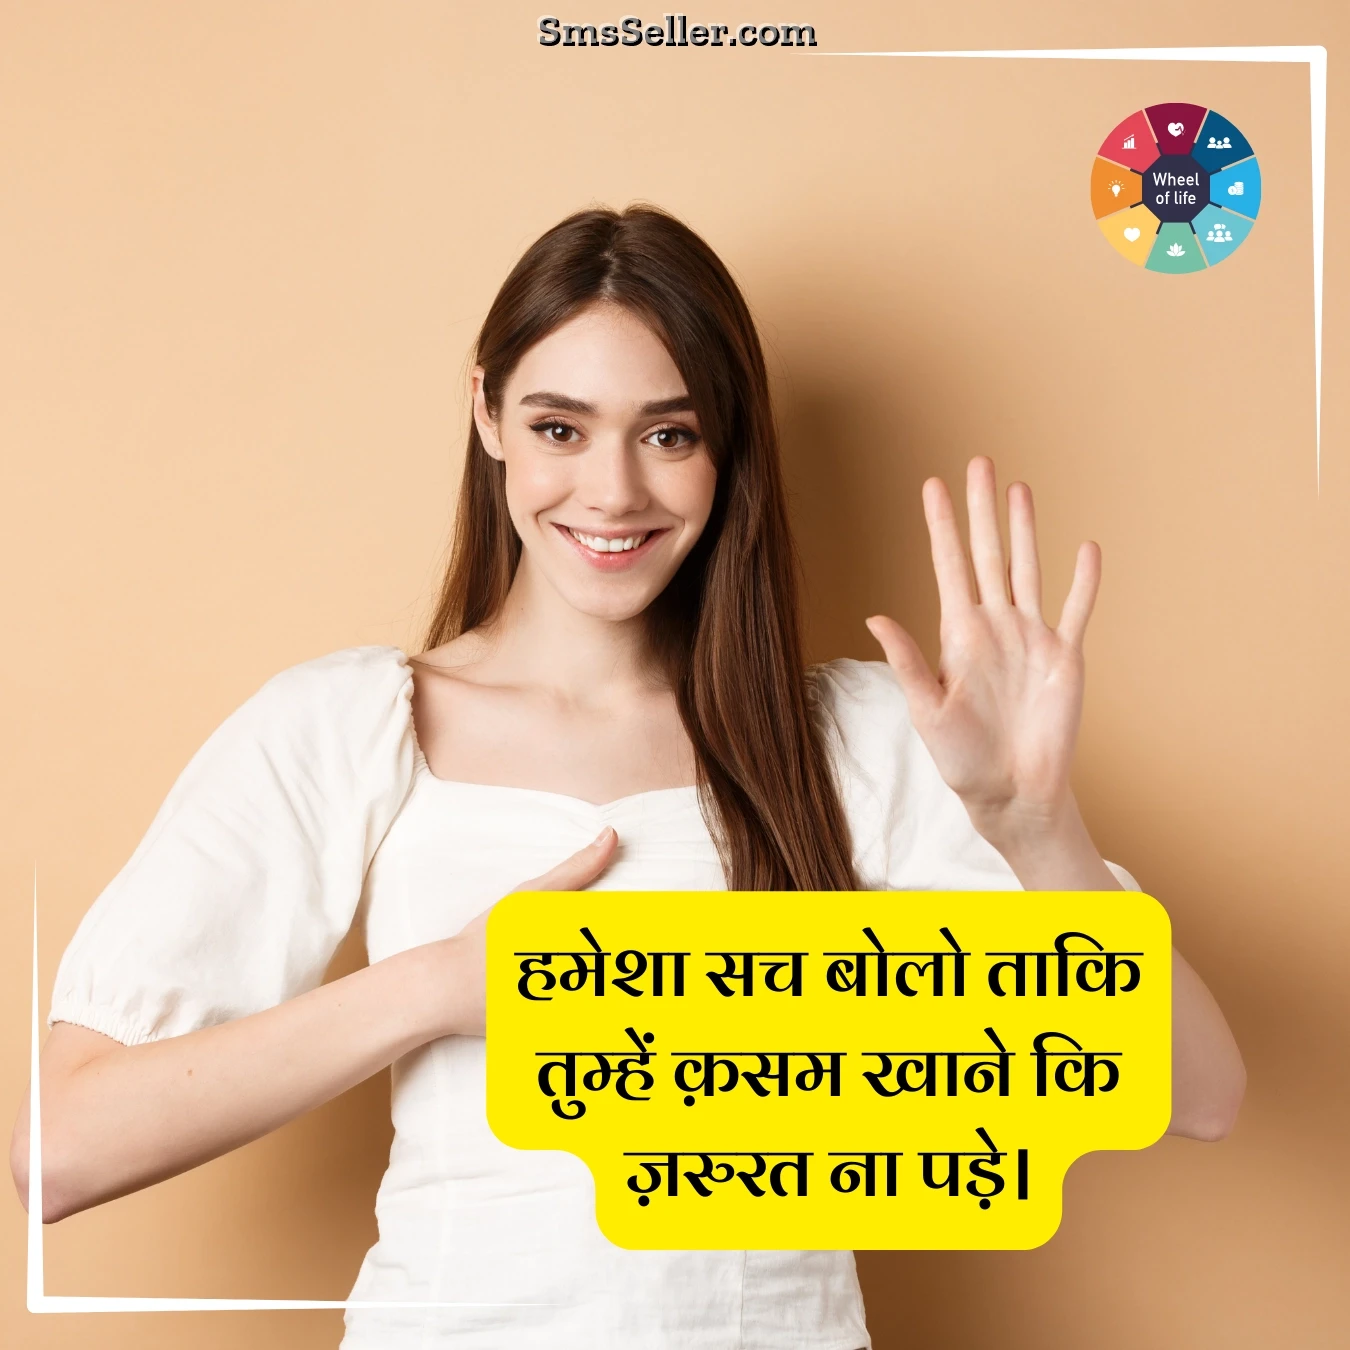 life quotes in hindi sach bolo aatma santushti